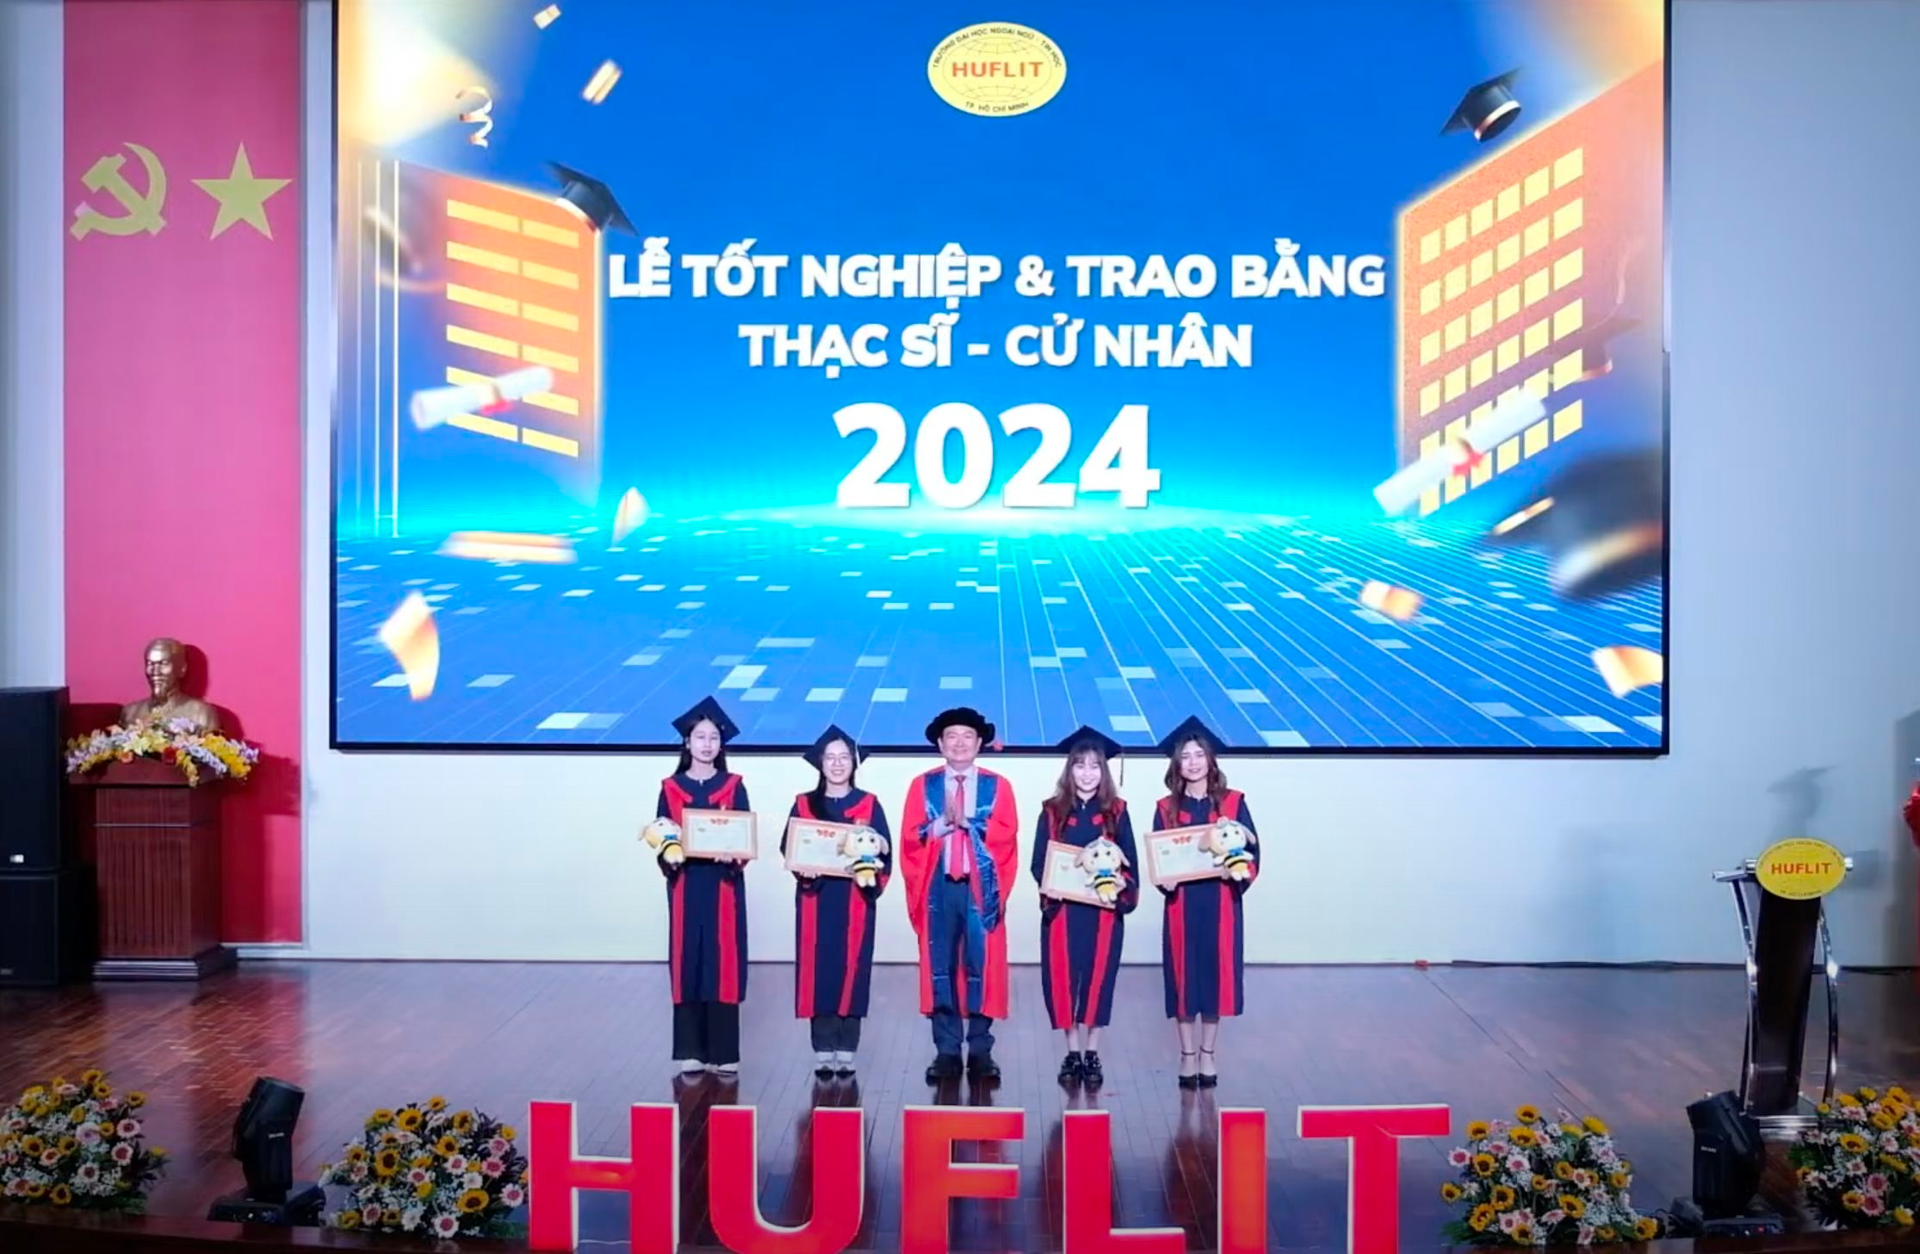 huflit-khen-thuong-sv.png